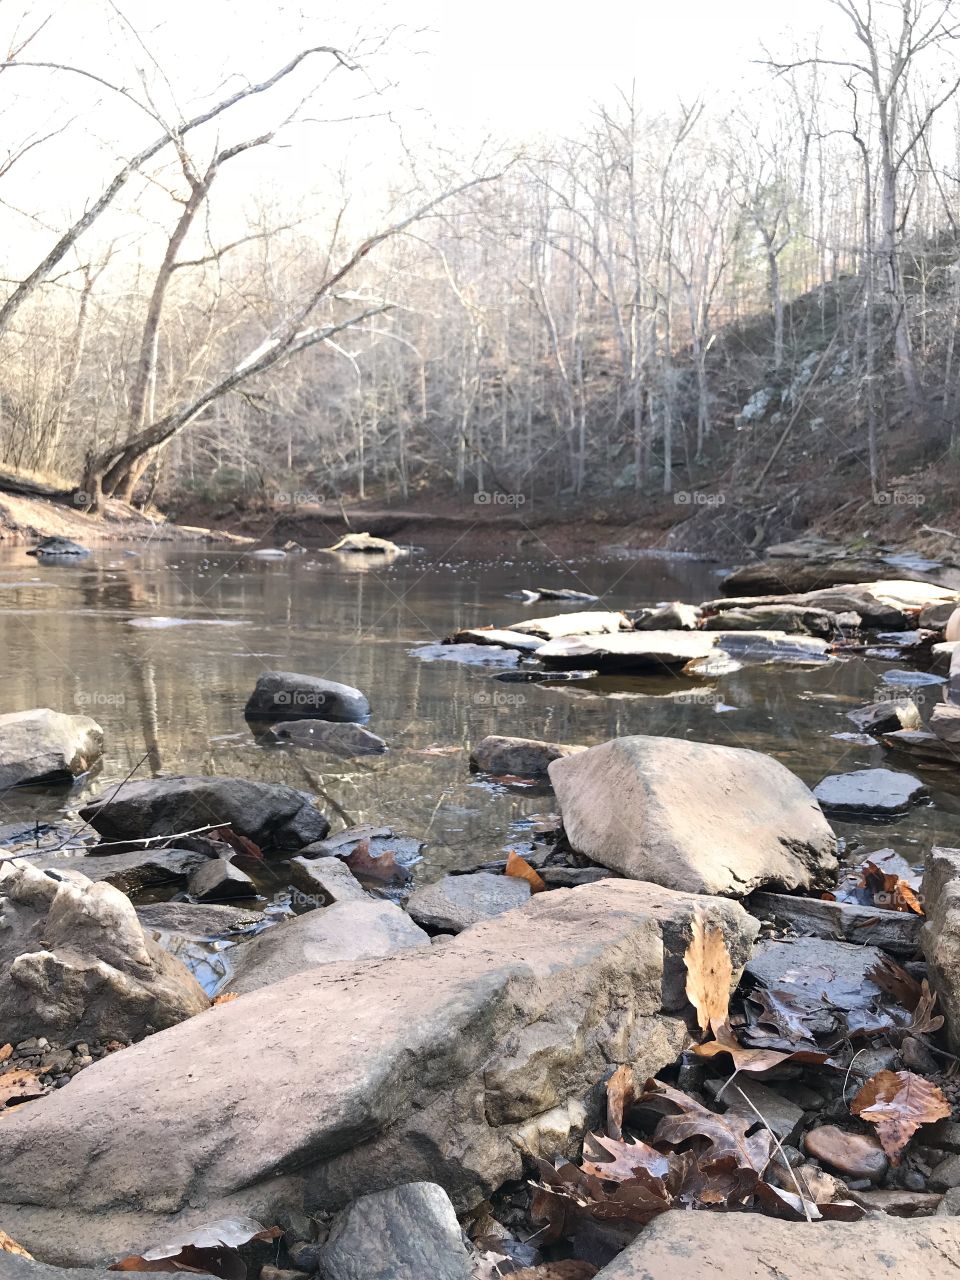 Hiking in VA, winter and nature